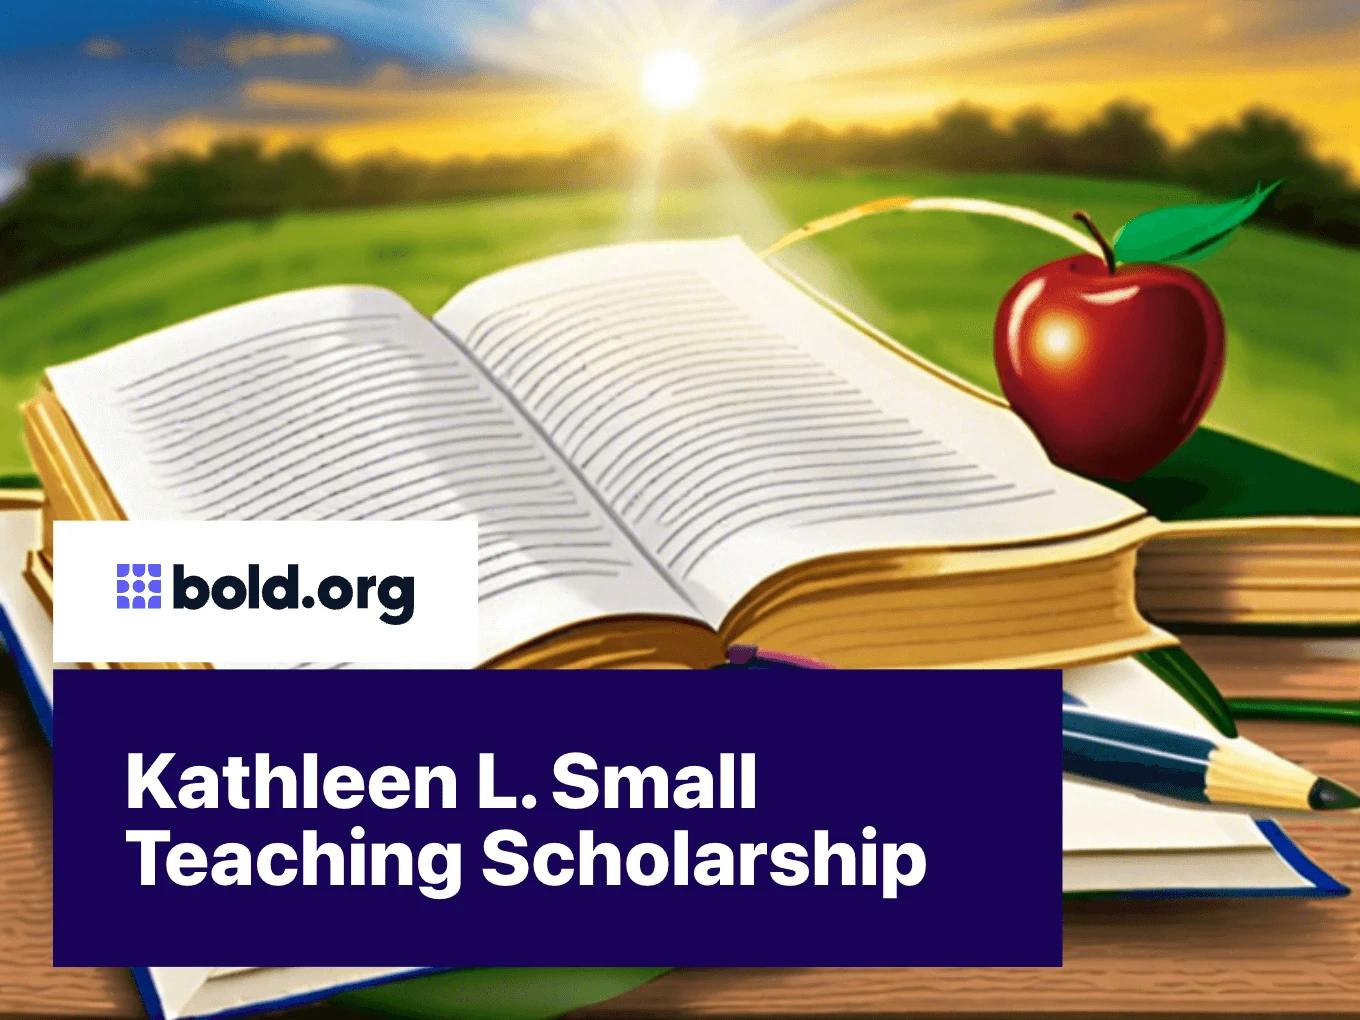 Kathleen L. Small Teaching Scholarship